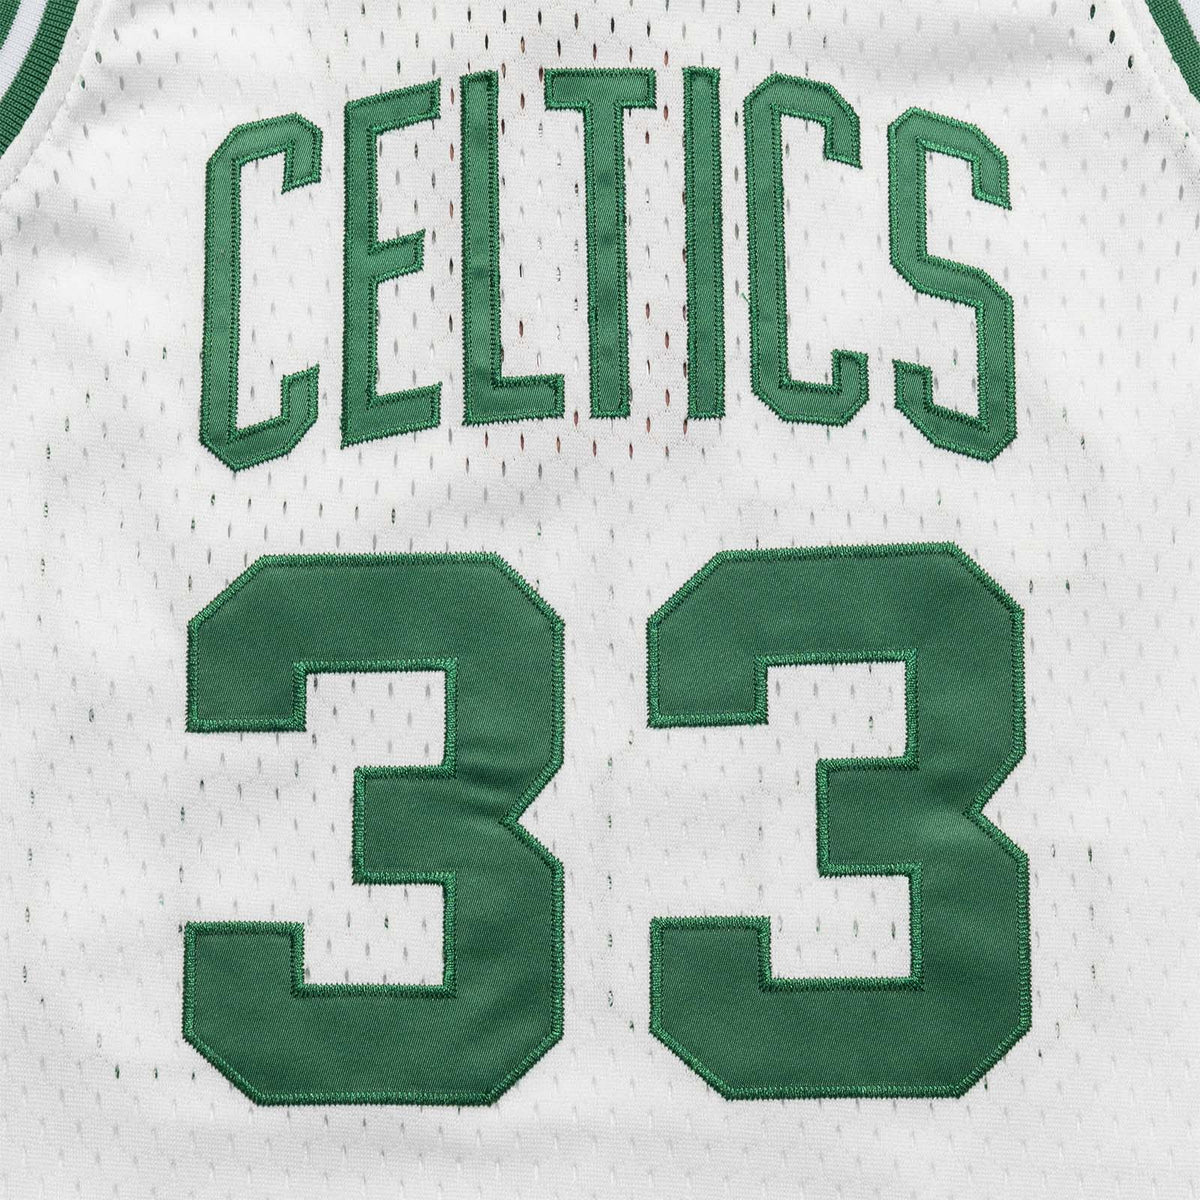 Larry Bird Boston Celtics 85-86 HWC Youth Swingman Jersey - White